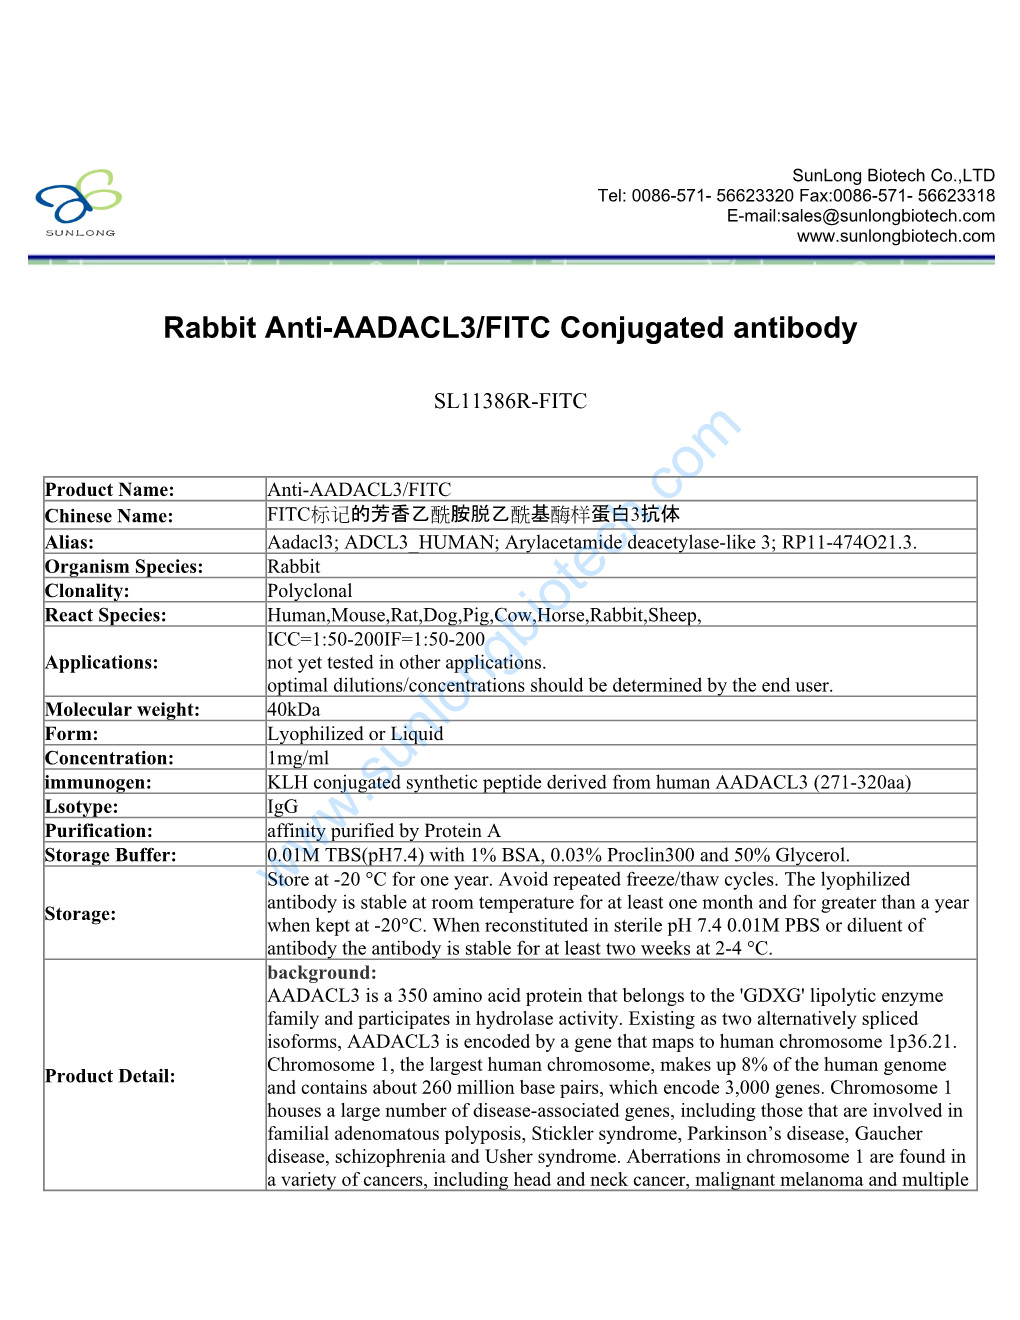 Rabbit Anti-AADACL3/FITC Conjugated Antibody